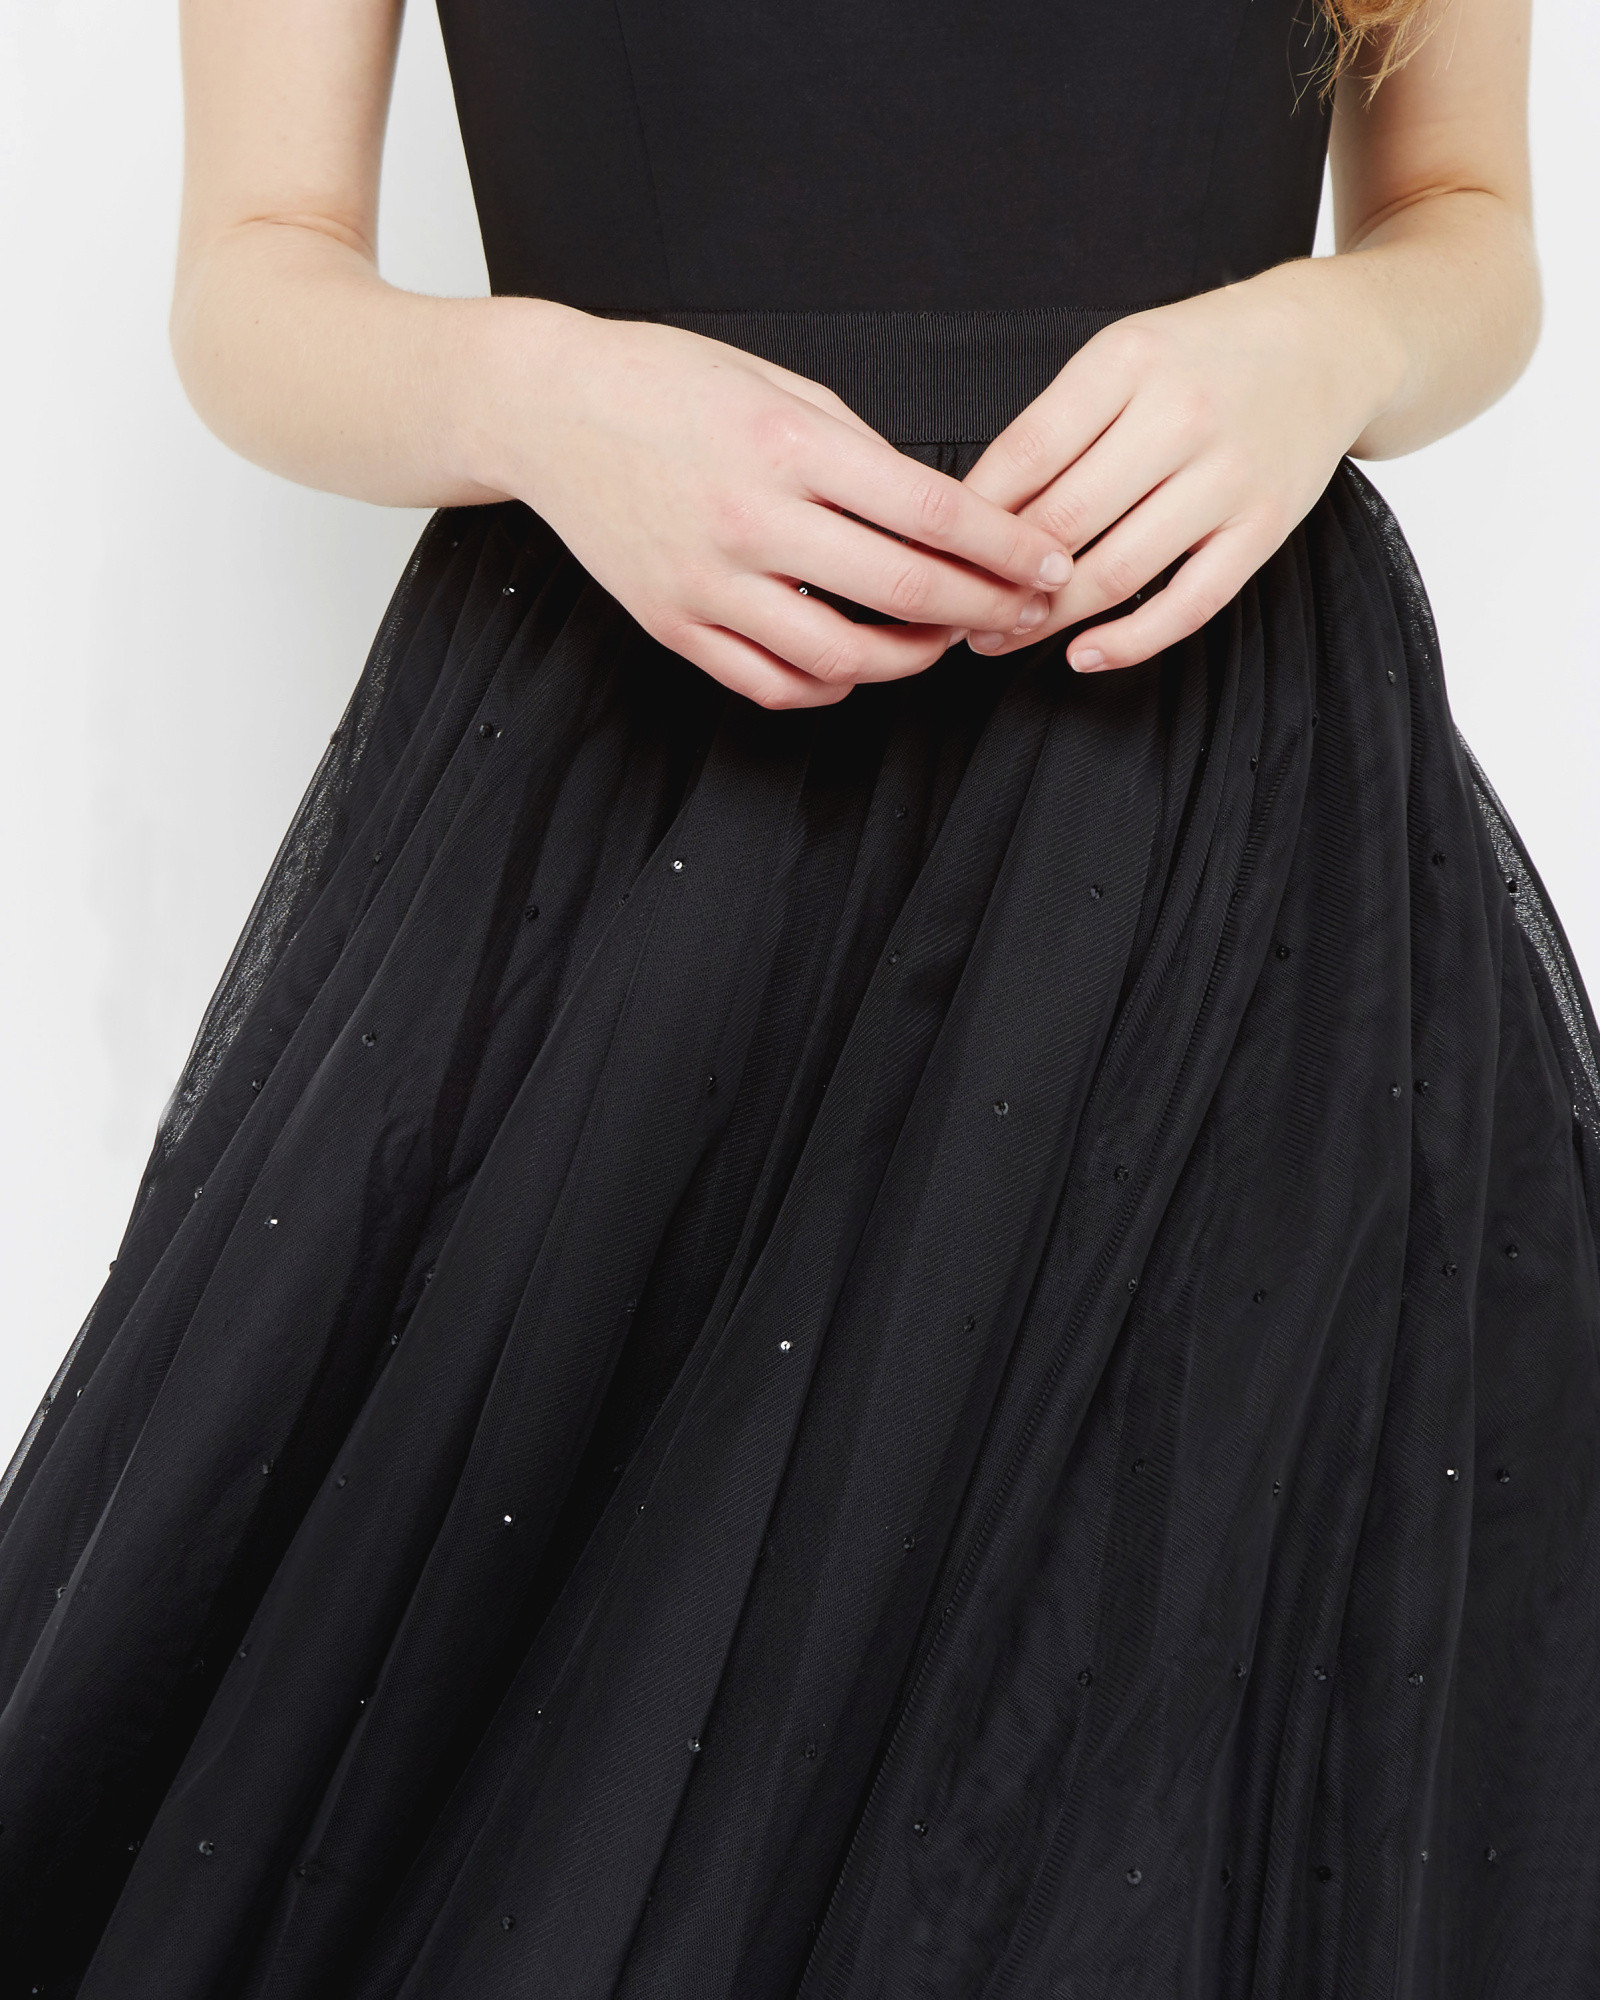 black dress with skirt